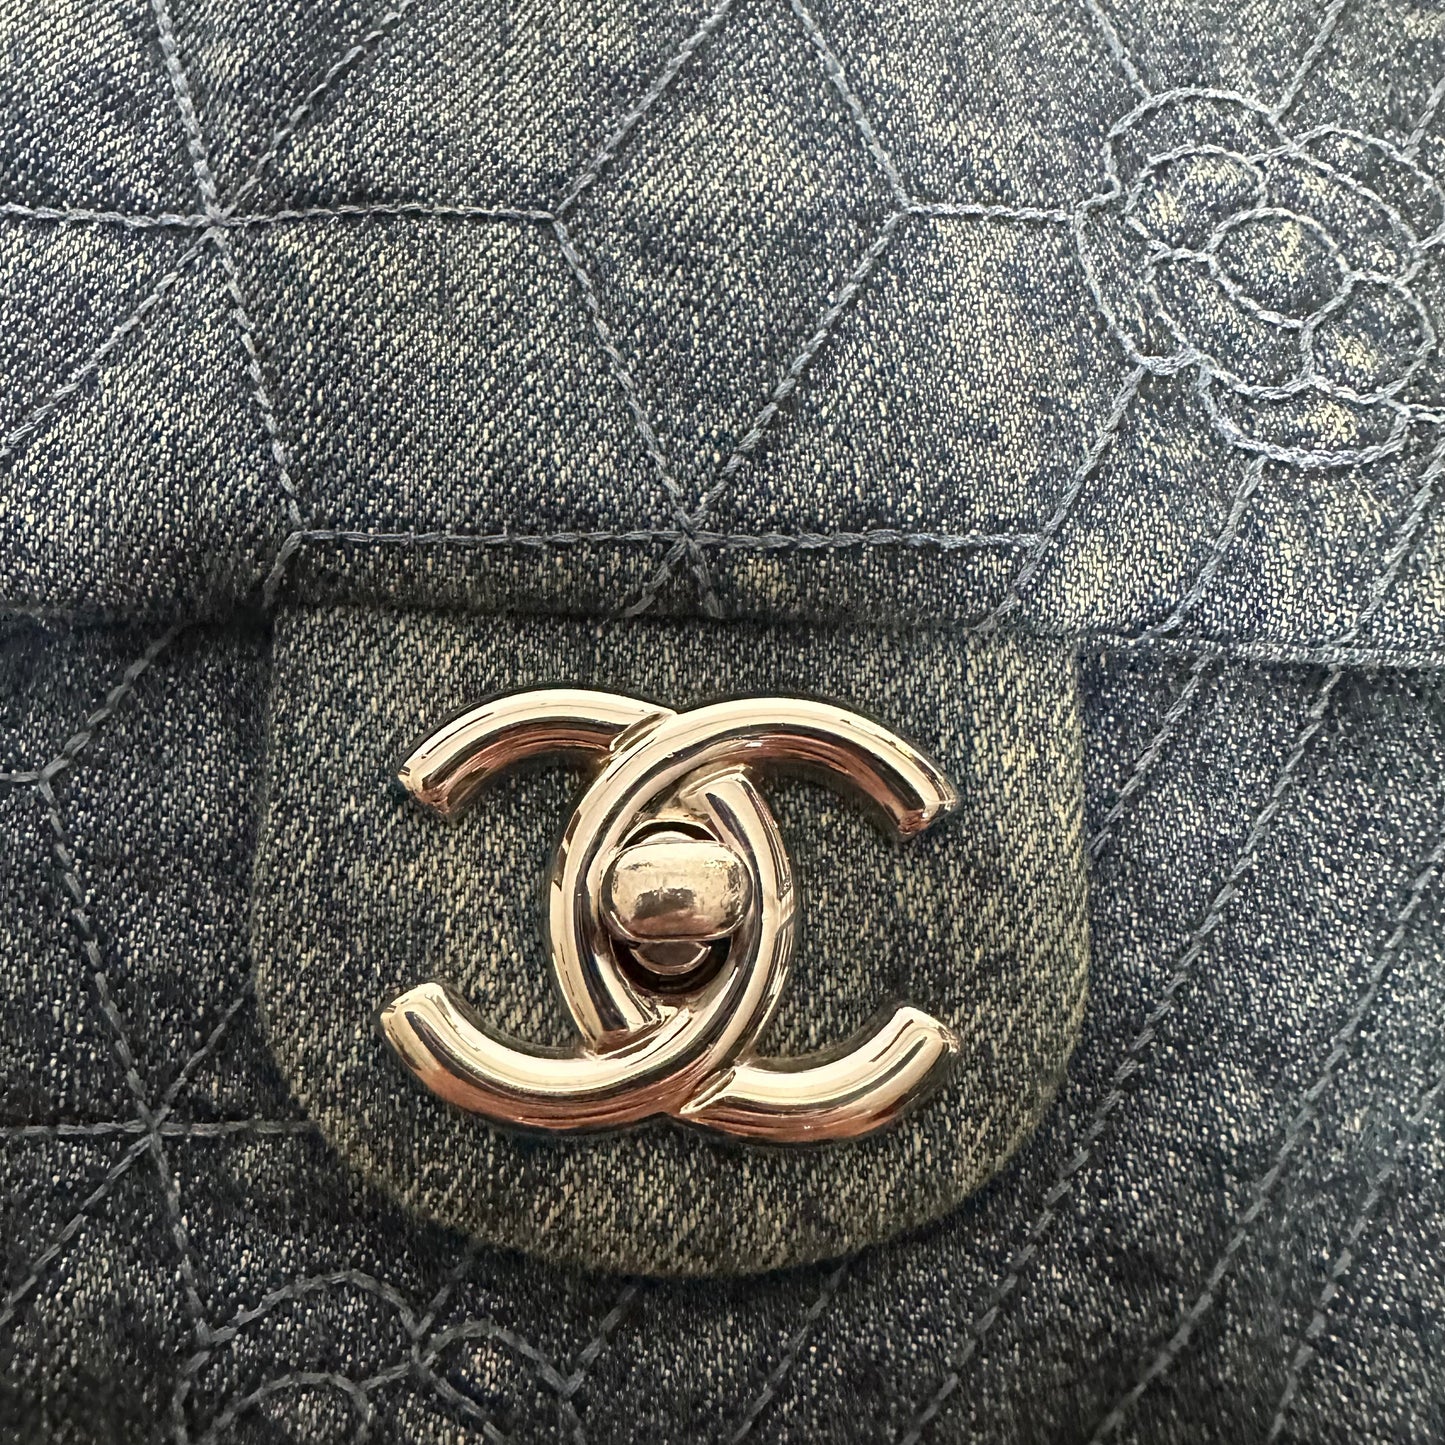 Chanel Denim Camilia Single Flap Bag